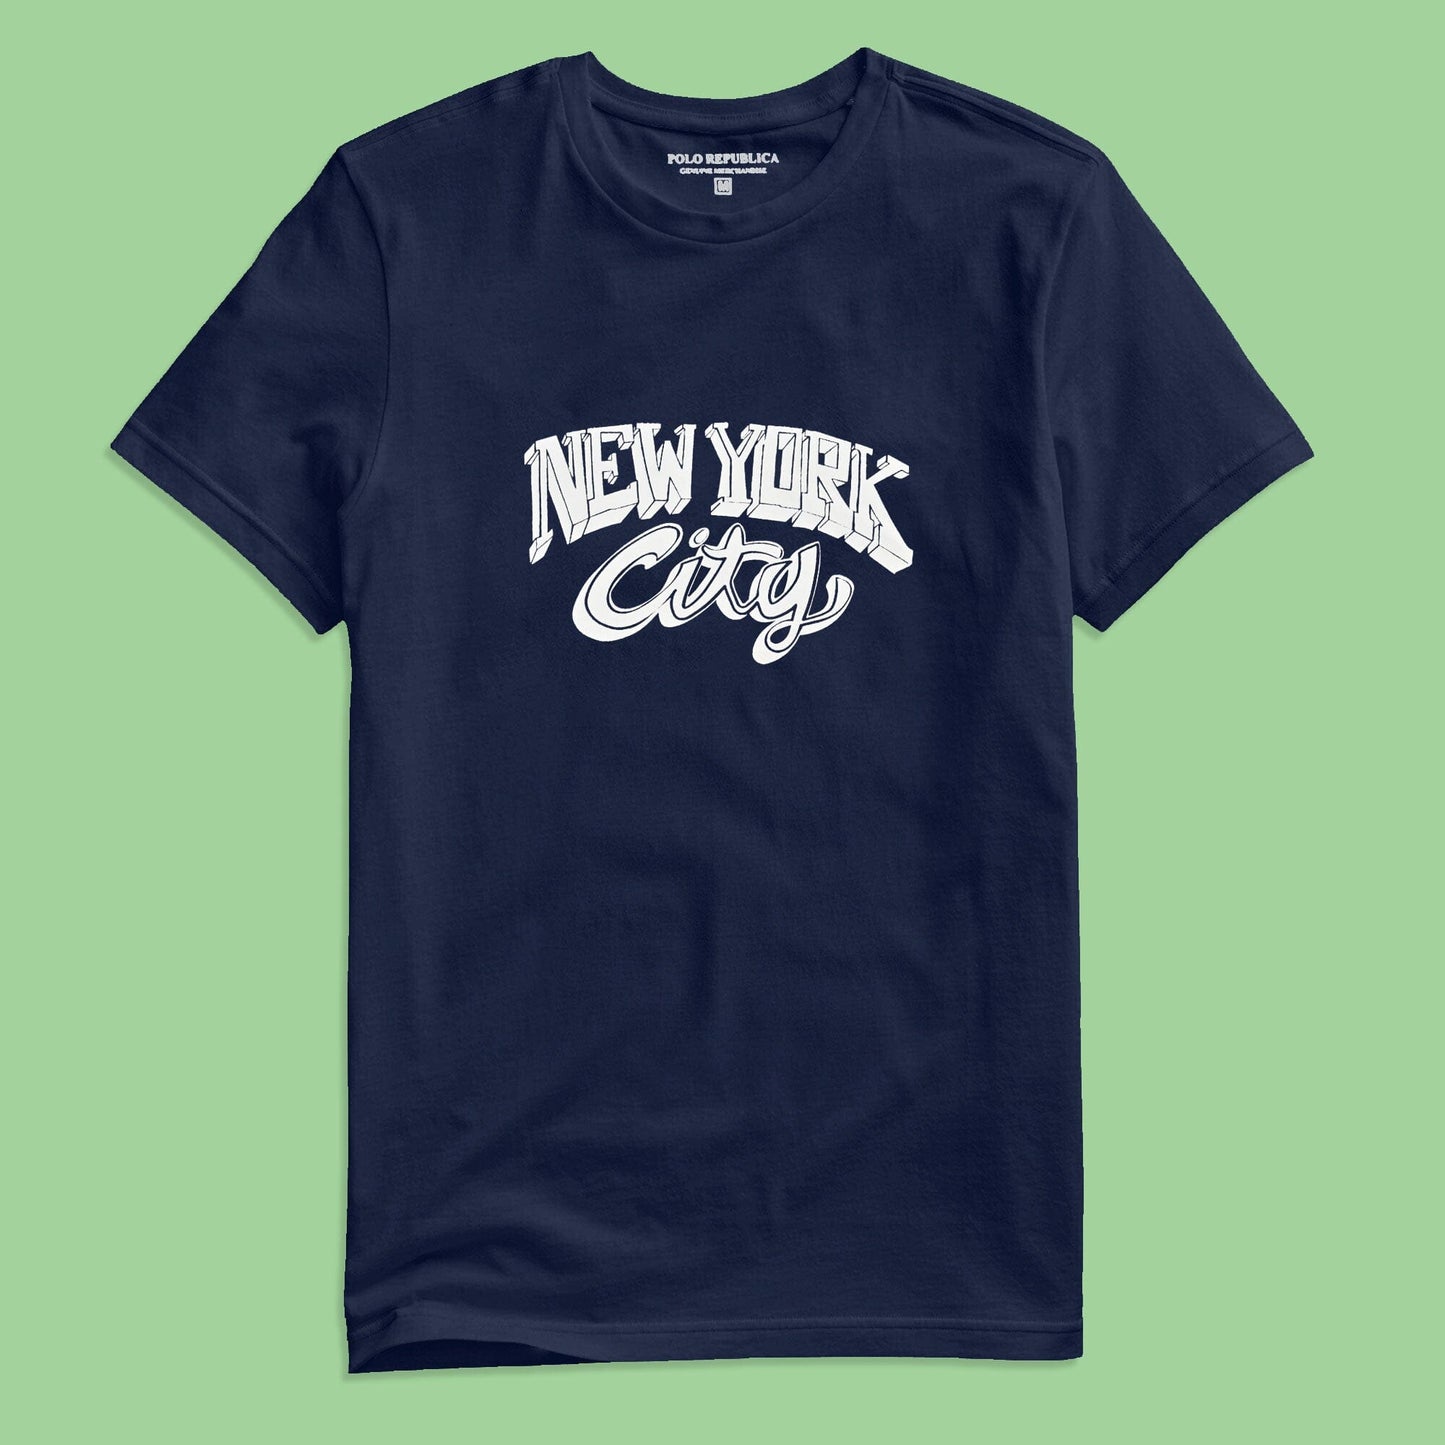 Polo Republica Men's New York City Printed Short Sleeve Tee Shirt